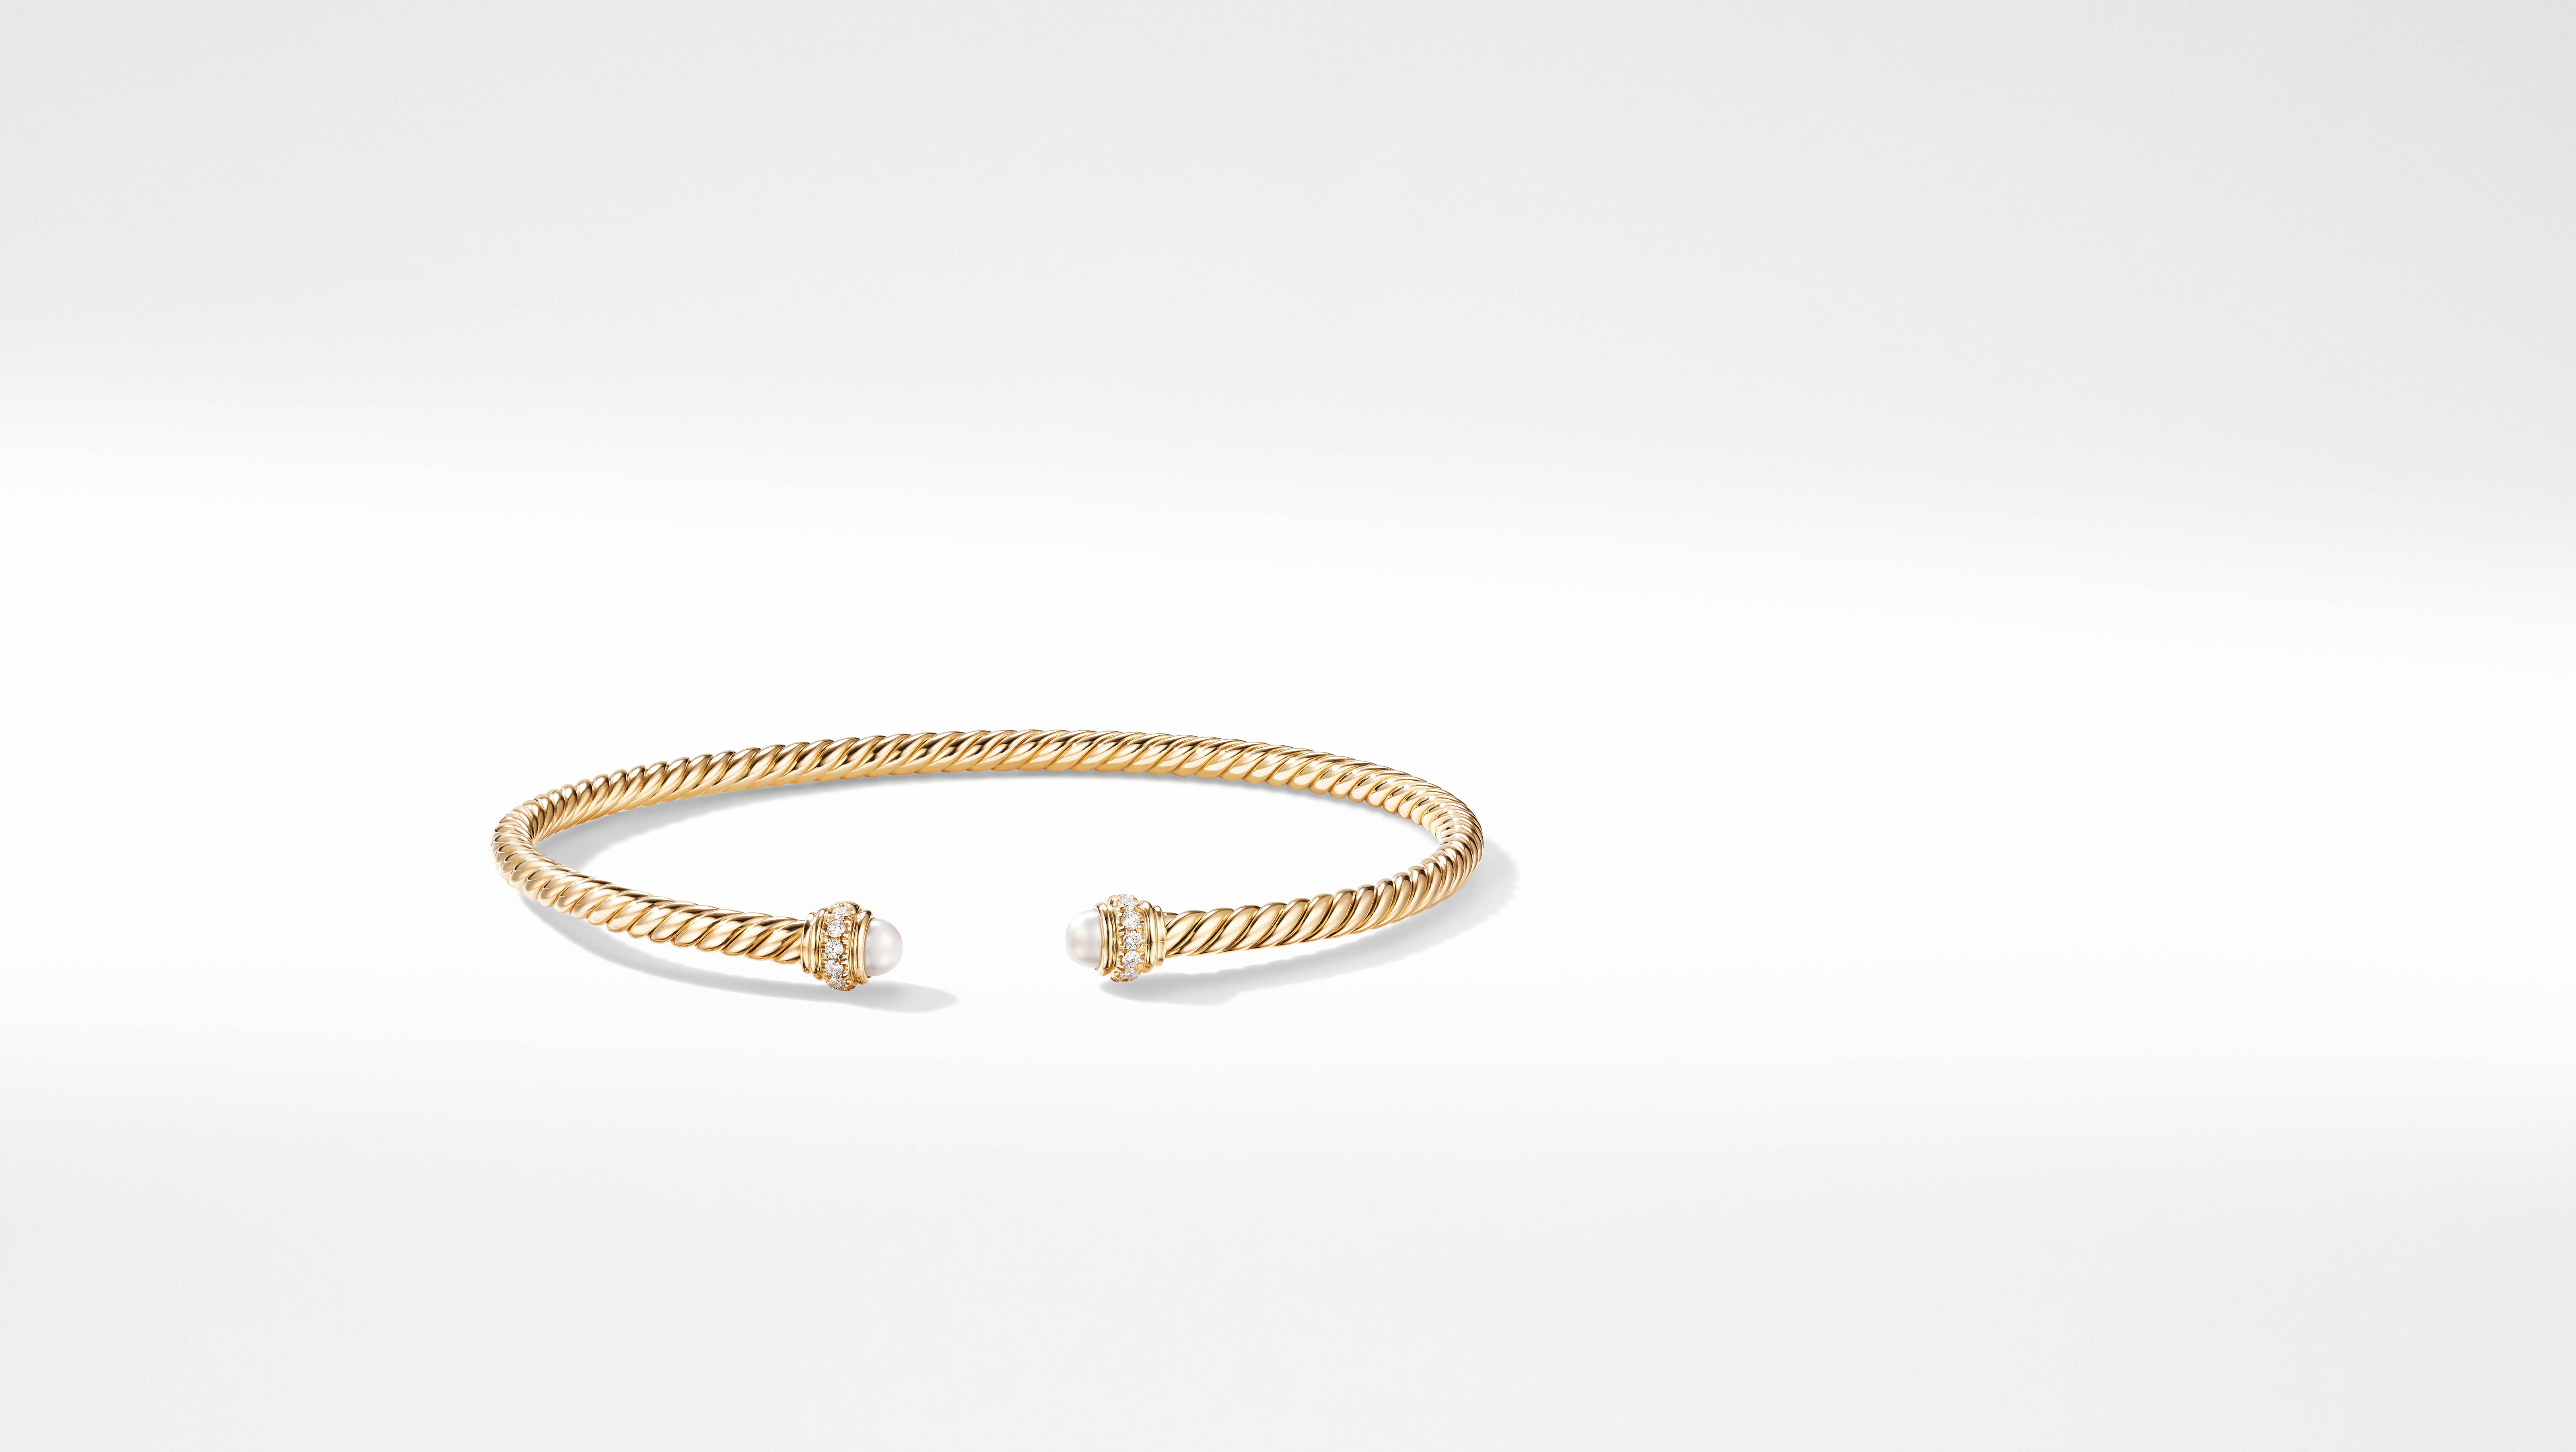 David Yurman Cablespira Bracelet in 18K Rose Gold Women's Size Small